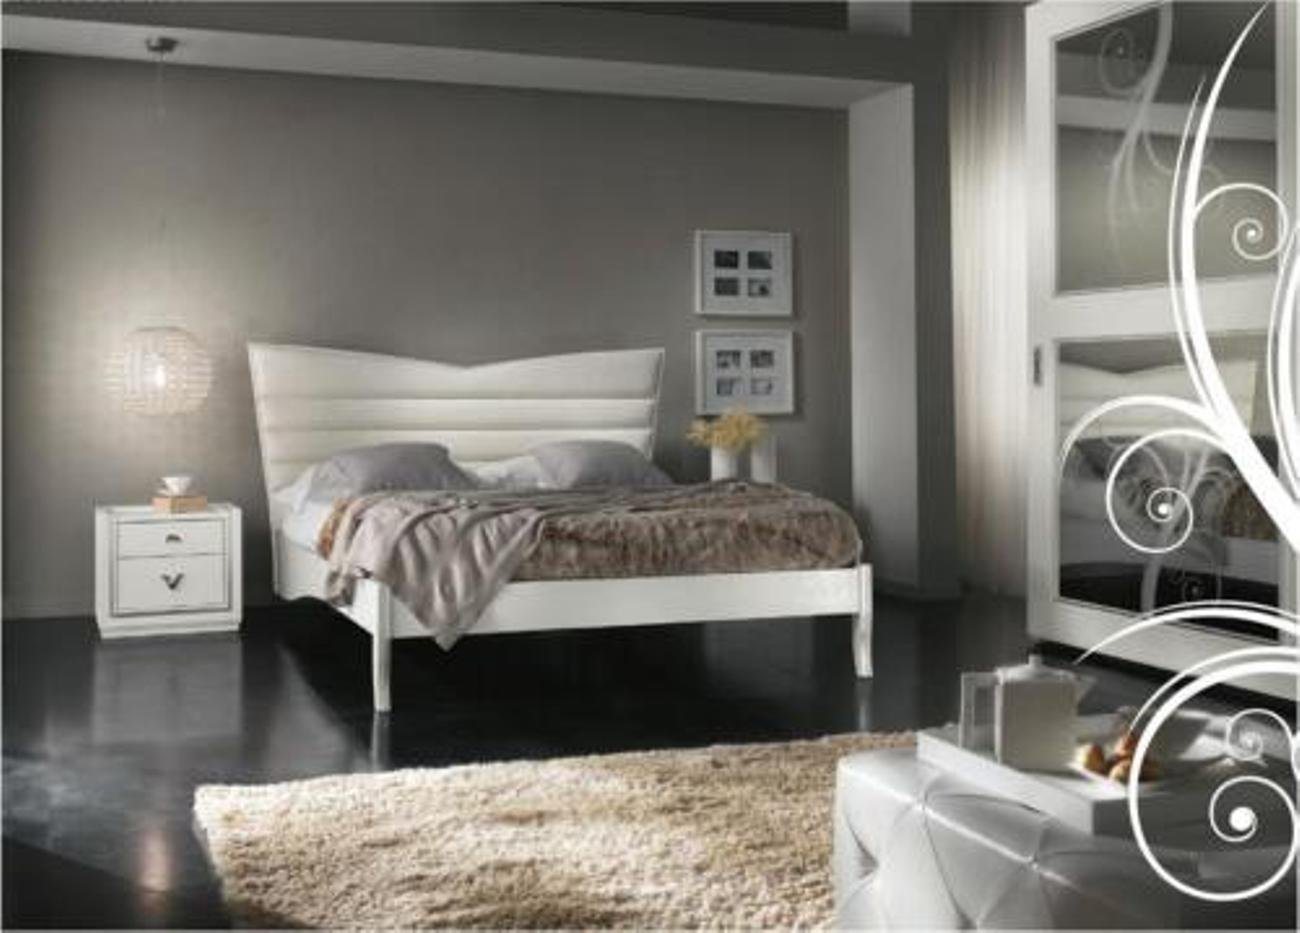 JVmoebel Bett, Luxus Bett Holz Betten Bettrahmen Weiß Doppel Bettgestell Betten von JVmoebel